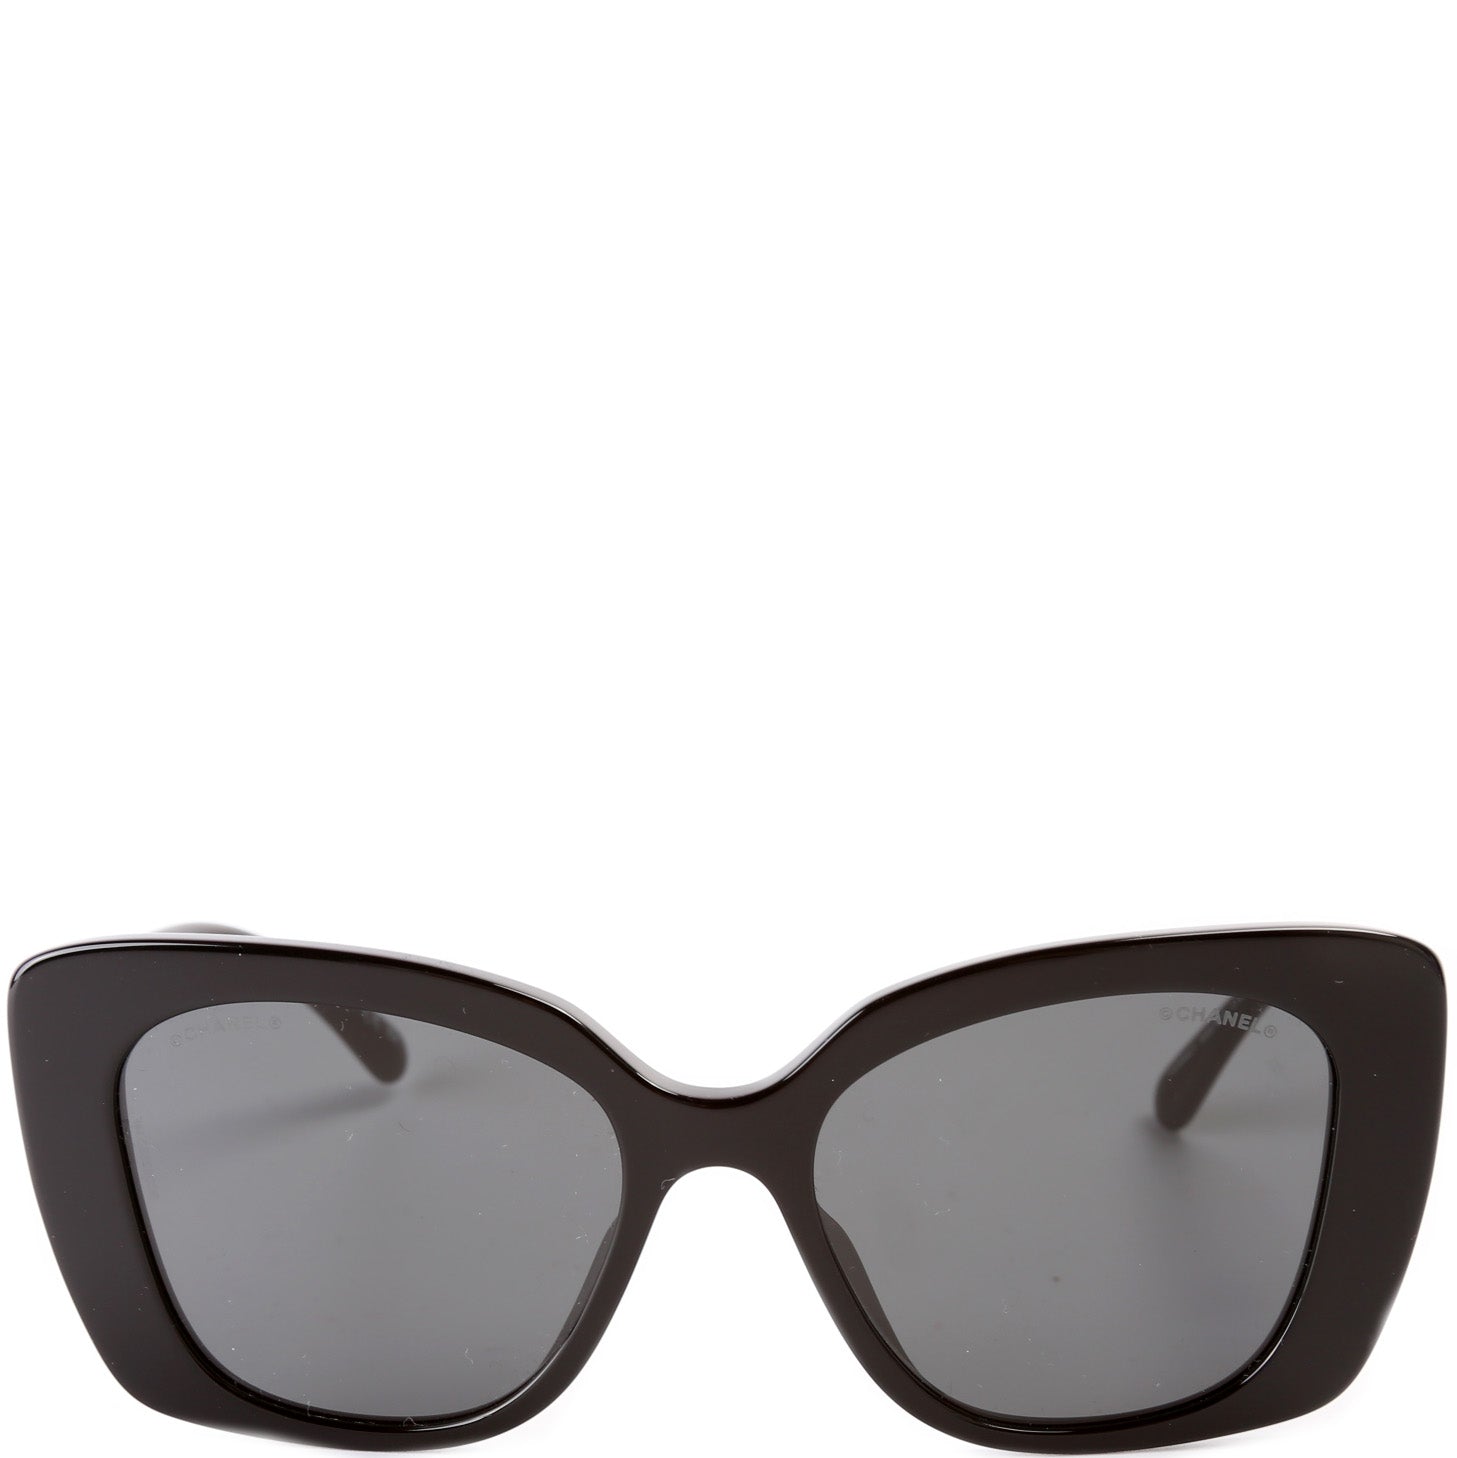 Chanel+5422B+1026%2FS4+Women%27s+Black+Cat+Eye+Sunglasses+Shades+